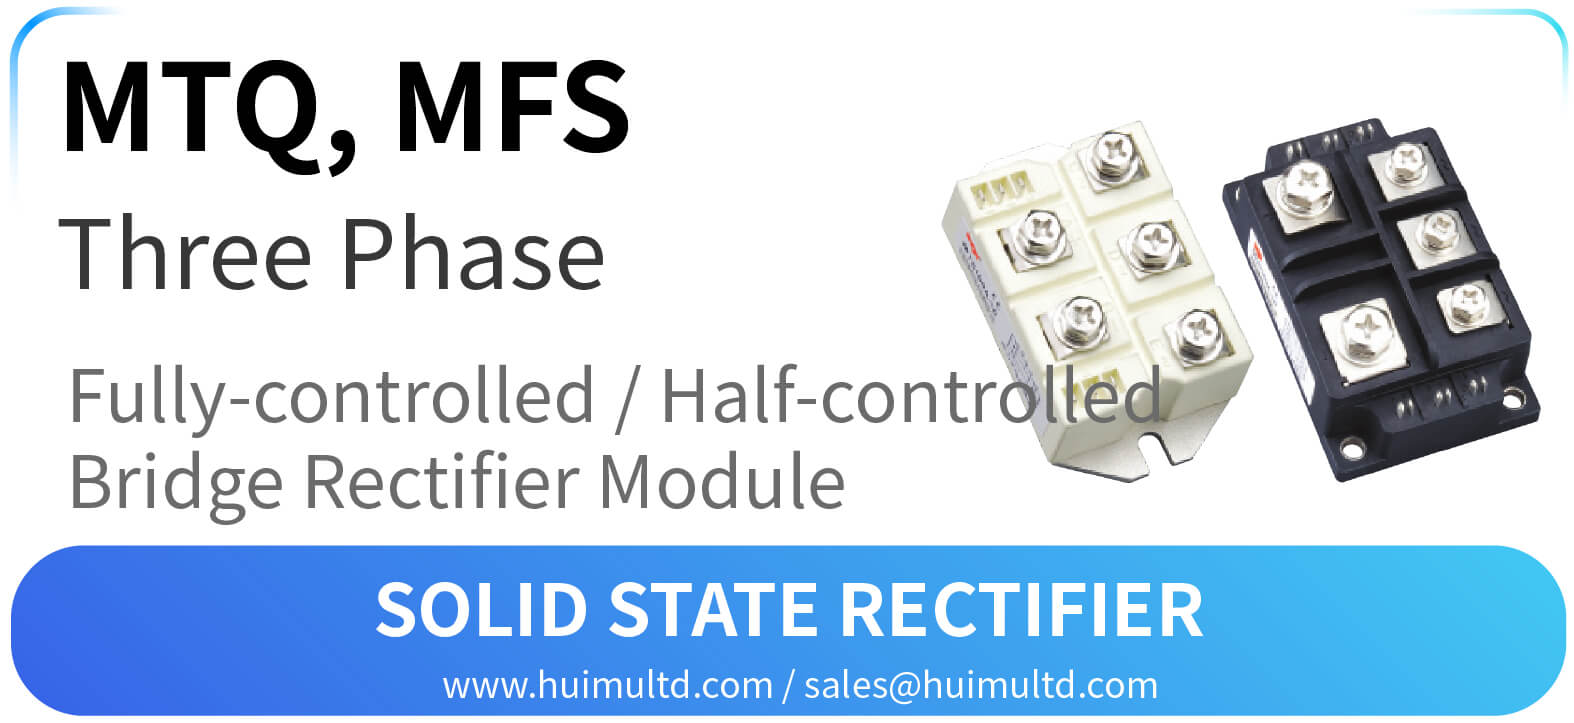 MTQ, MFS Series Solid State Rectifier